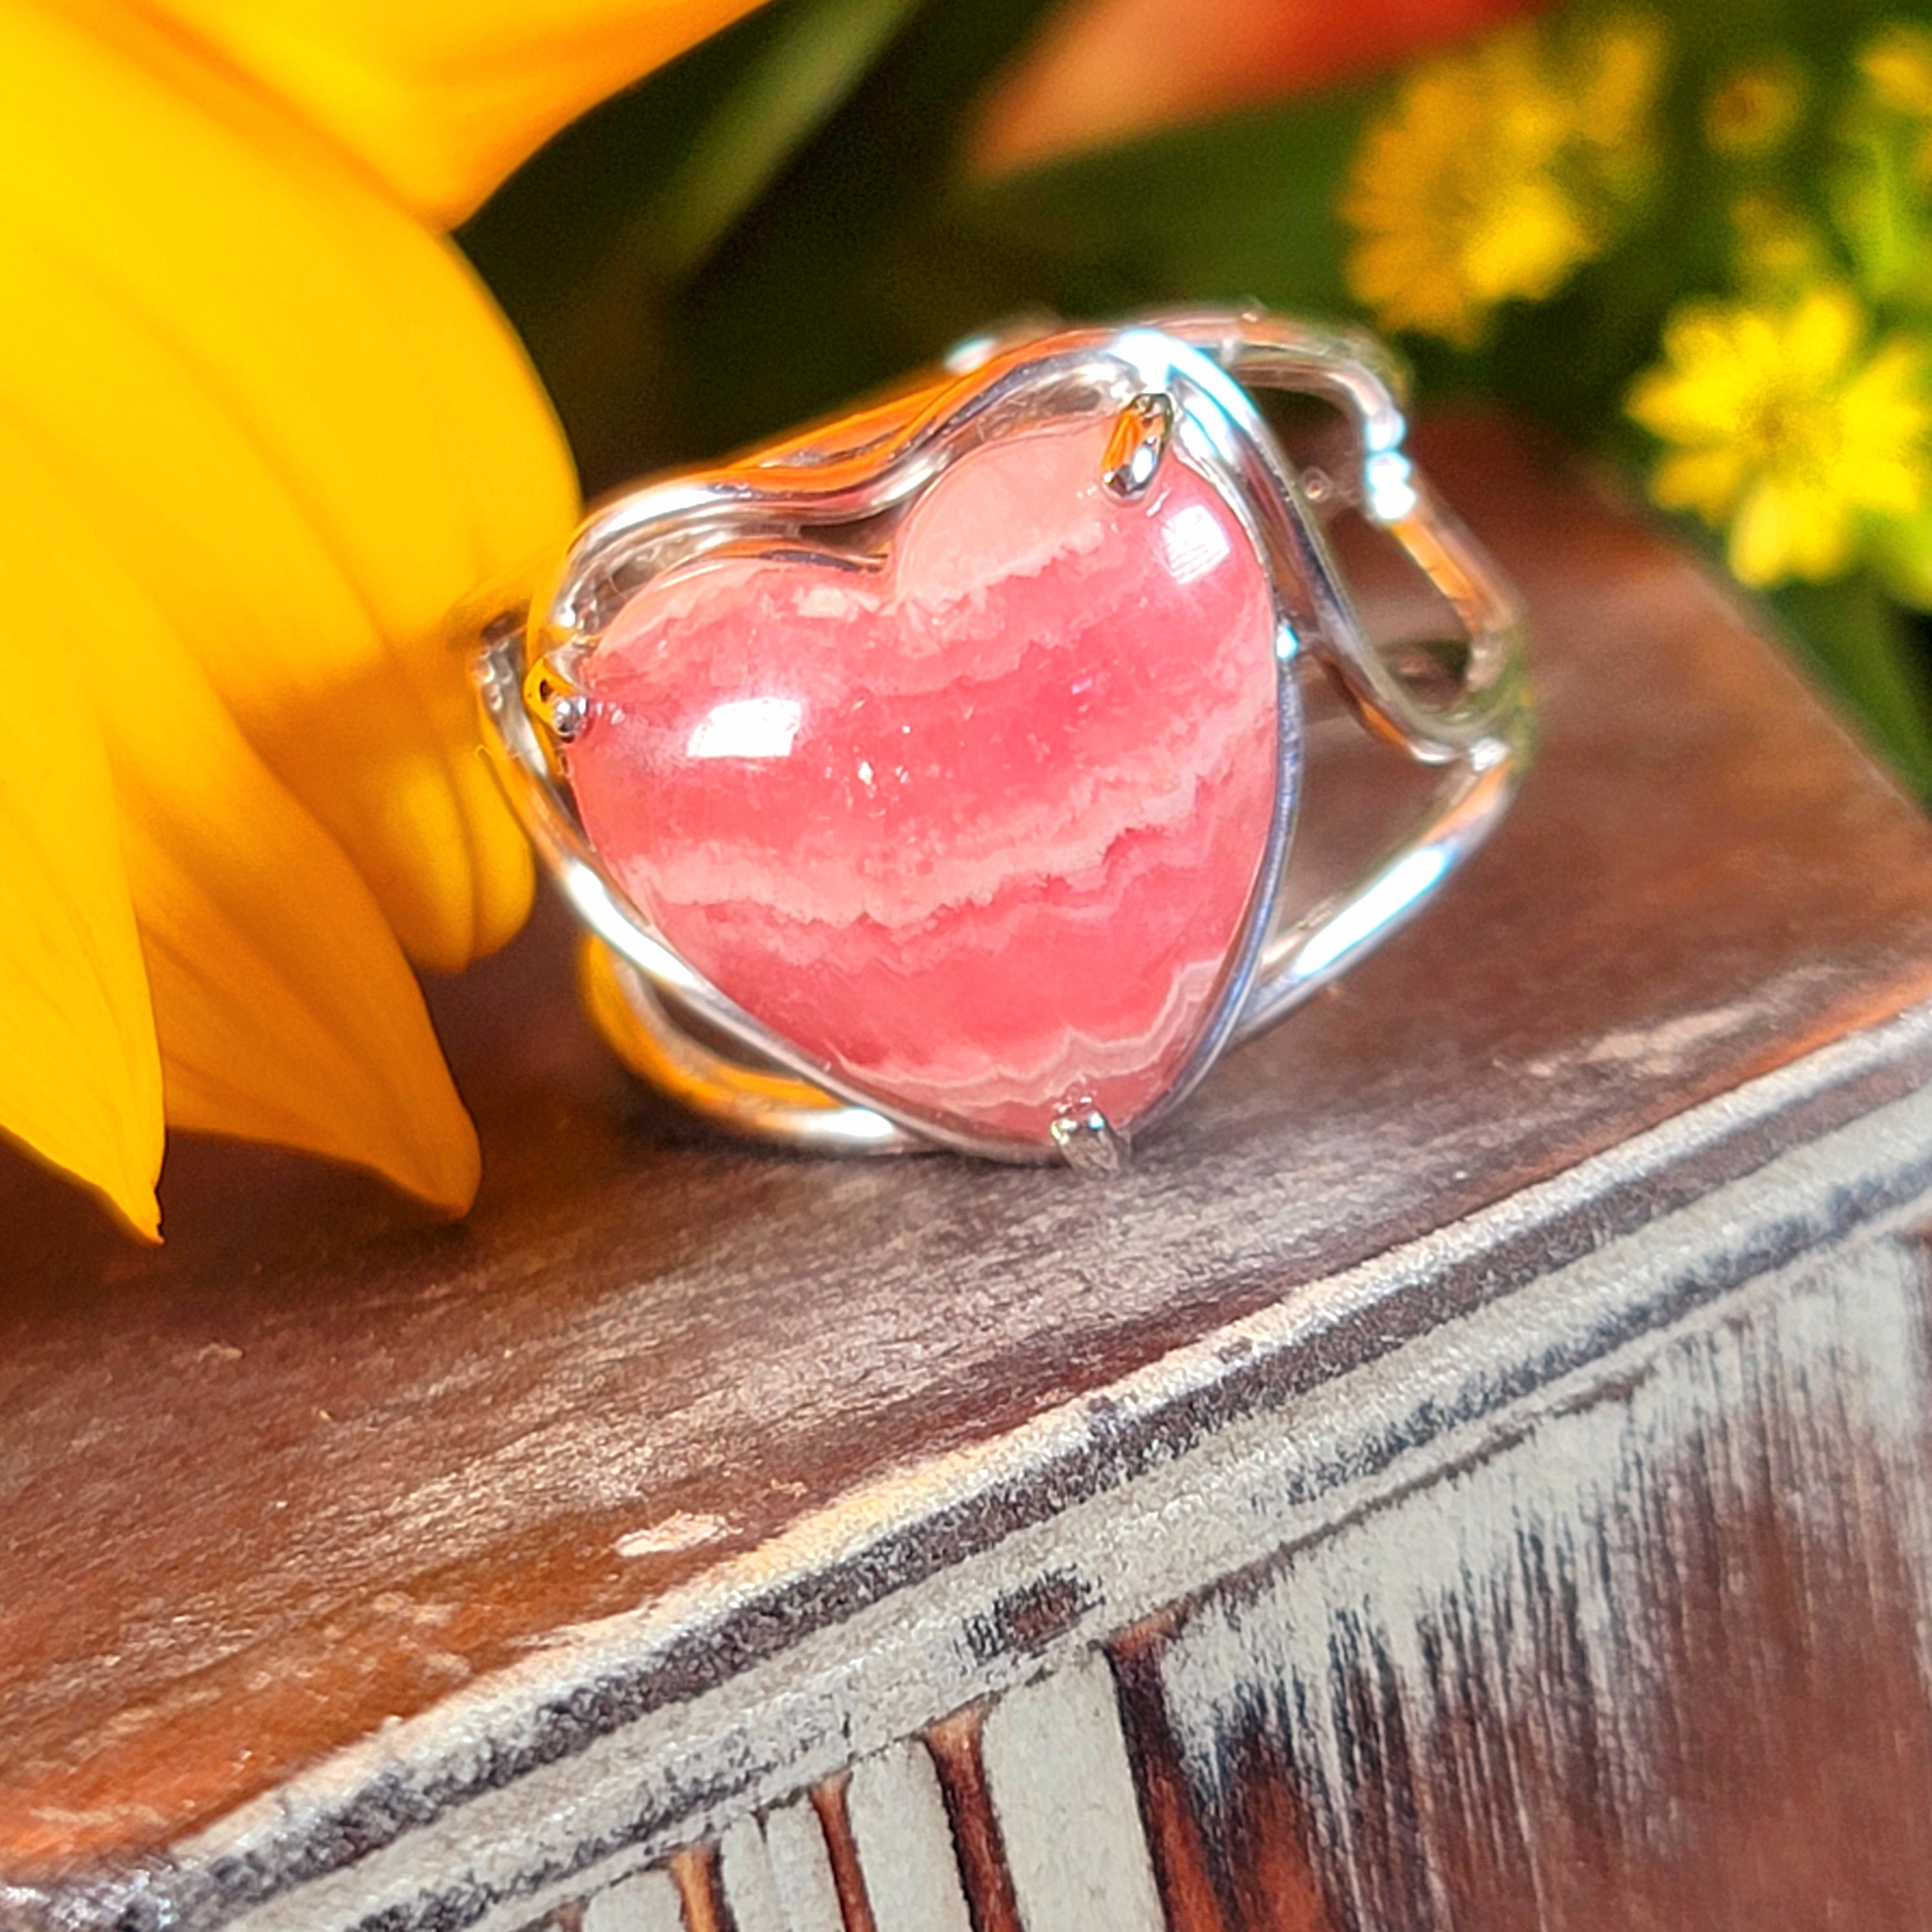 Rhodochrosite Heart Adjustable Finger Bracelet .925 Silver for Emotional and Trauma Healing